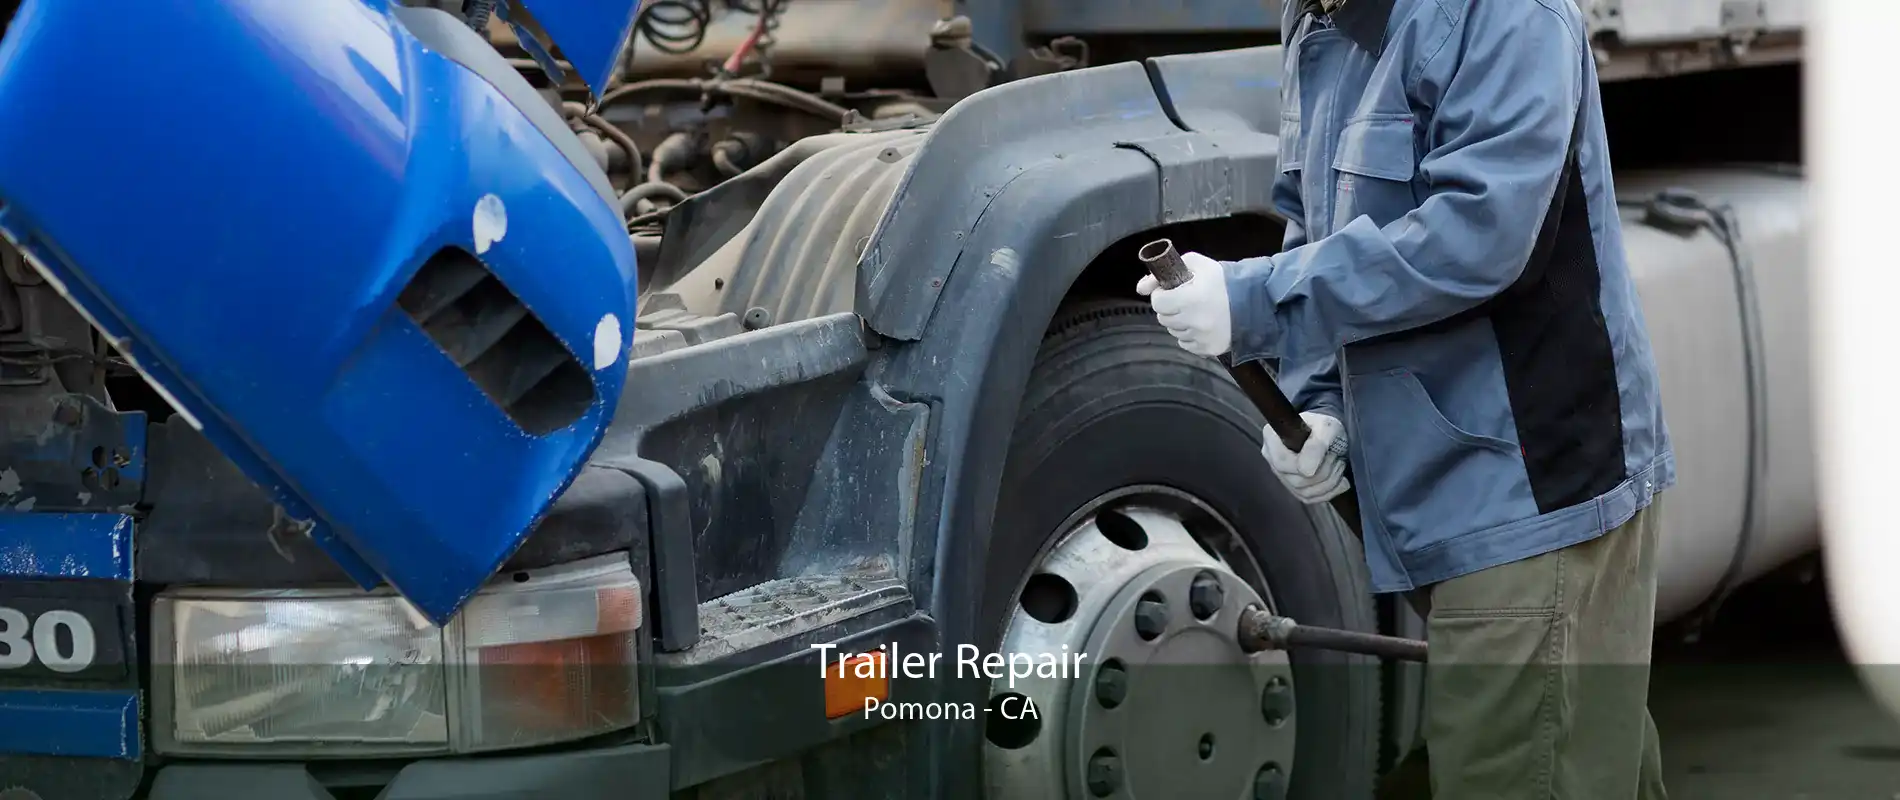 Trailer Repair Pomona - CA